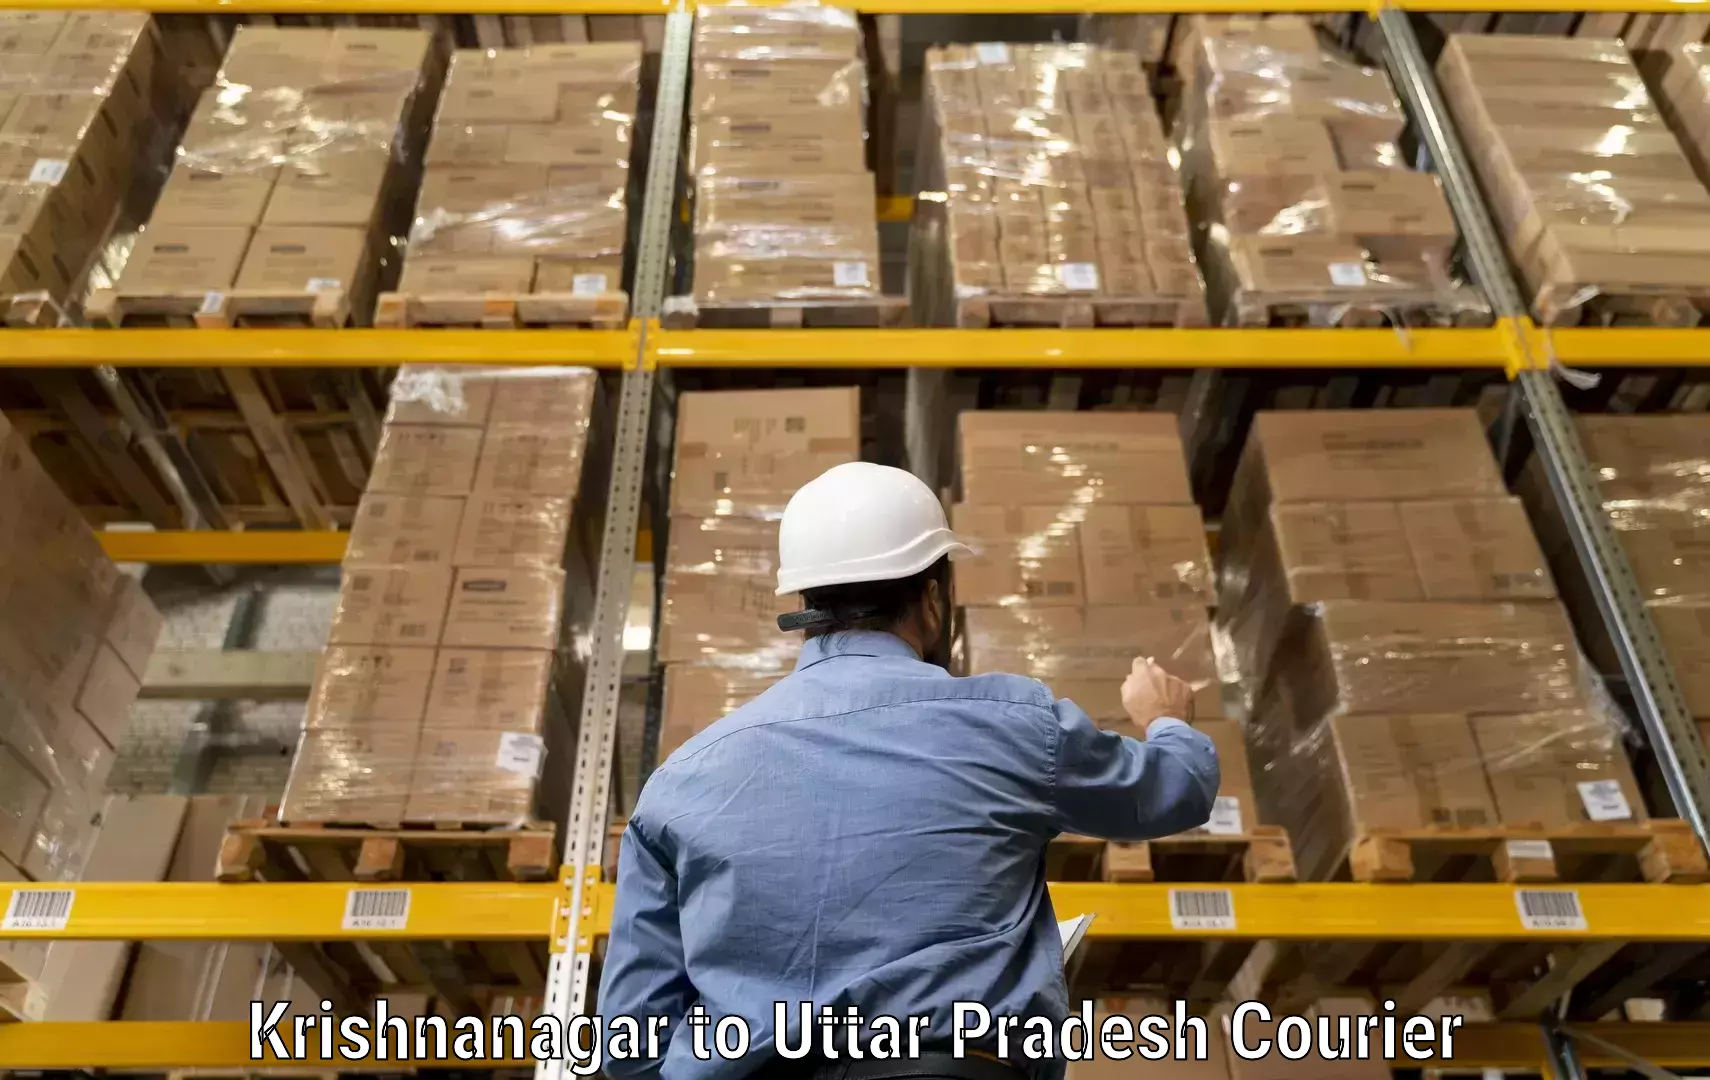 Customer-focused courier Krishnanagar to Khadda